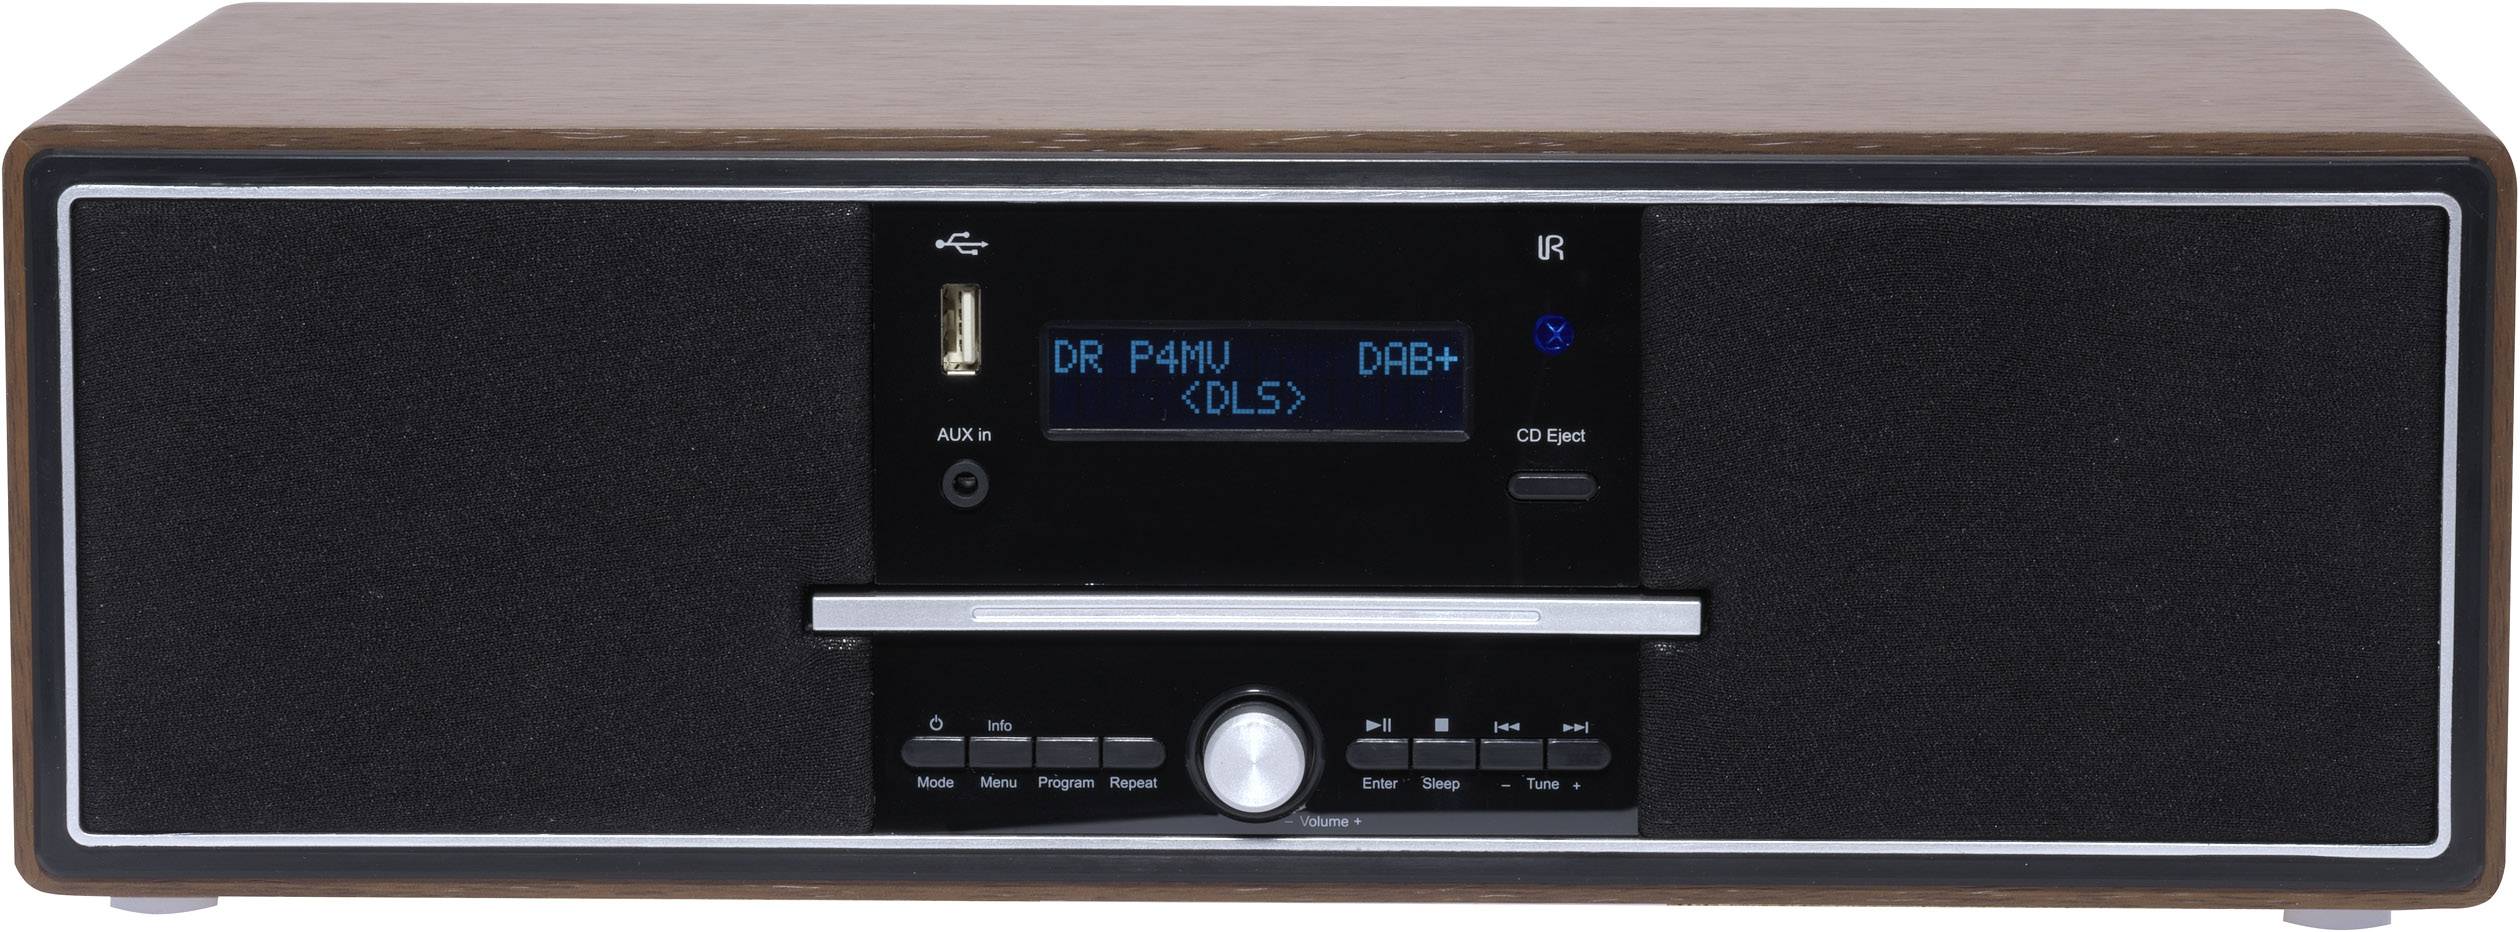 Denver MDA-250 Radio CD player DAB+, AUX, Bluetooth, CD, USB